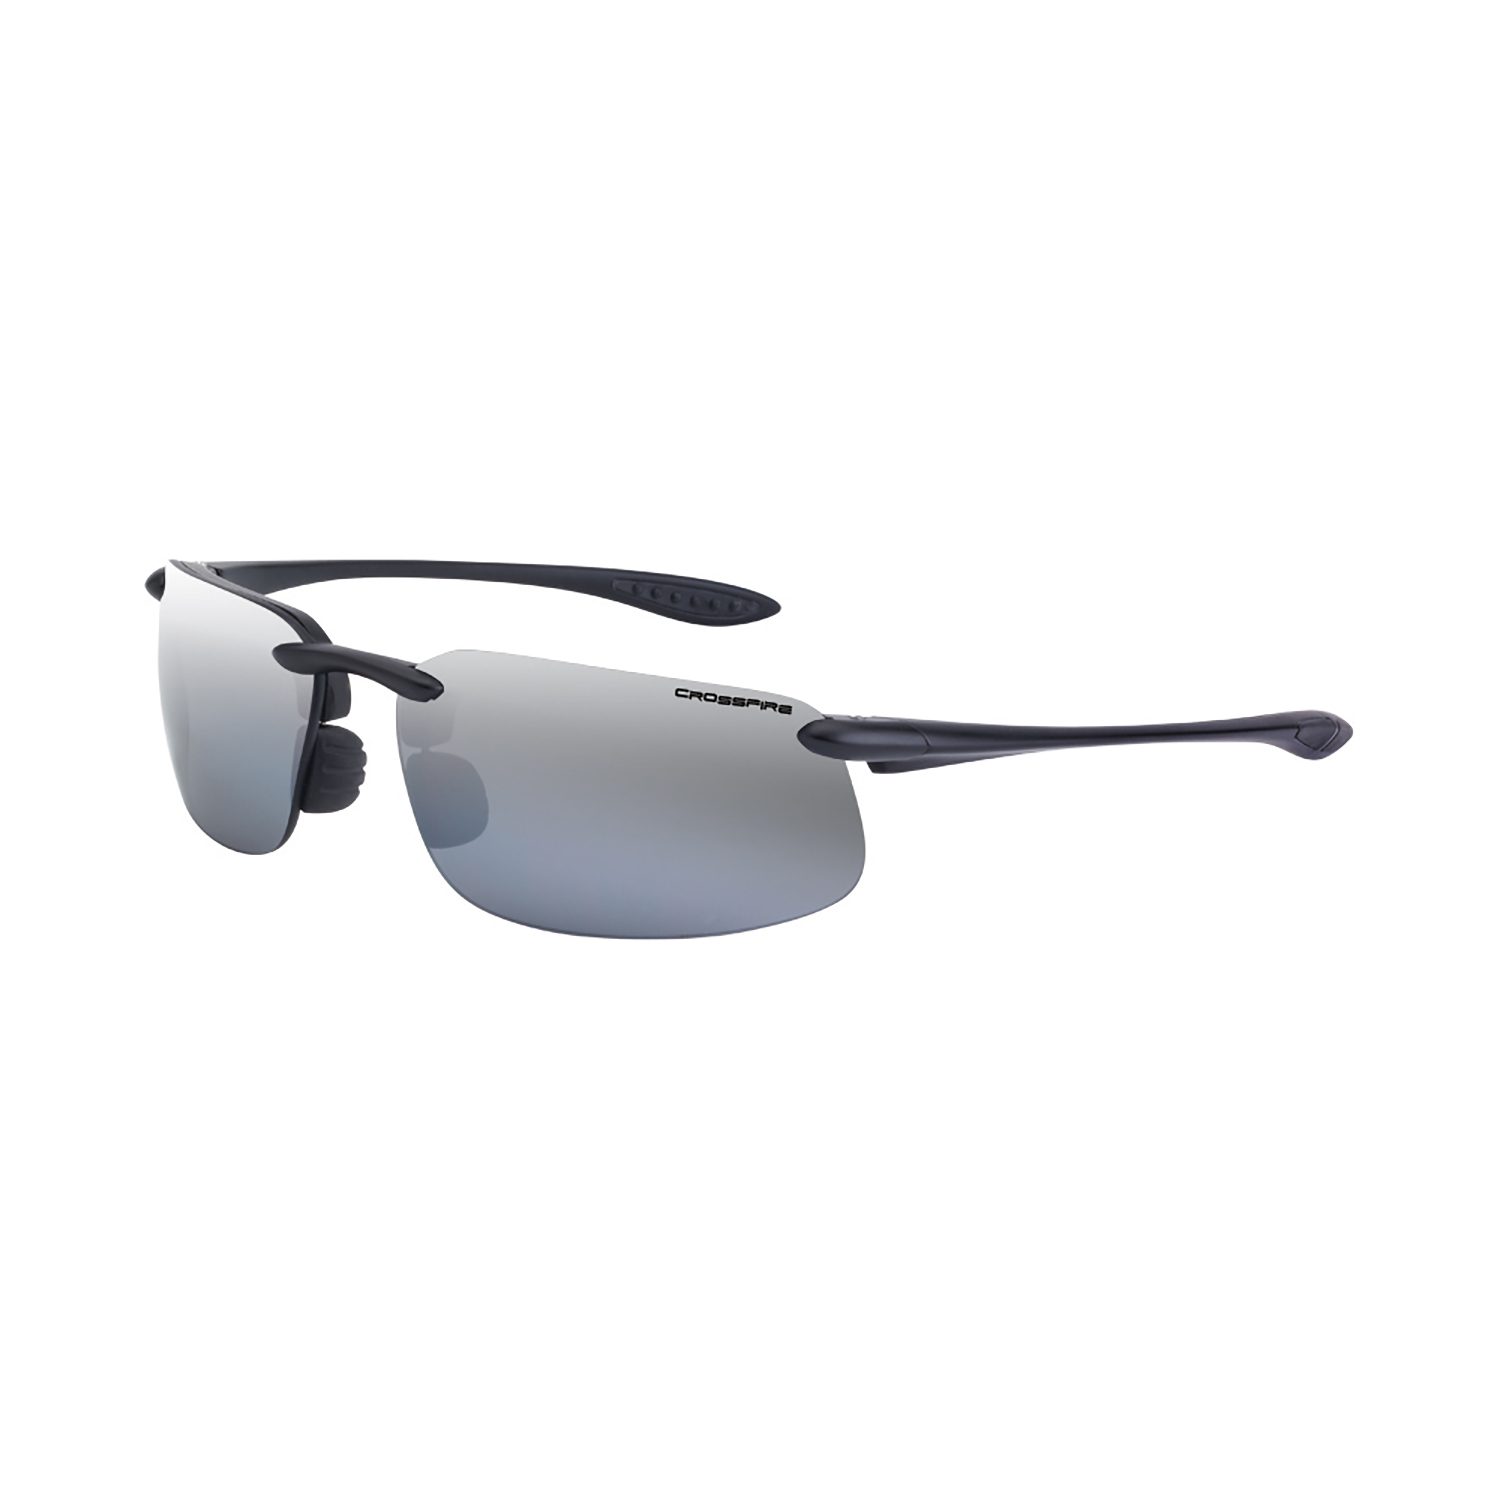 ES4 Premium Safety Eyewear - Shiny Black Frame - Silver Mirror Lens - Mirror Lens